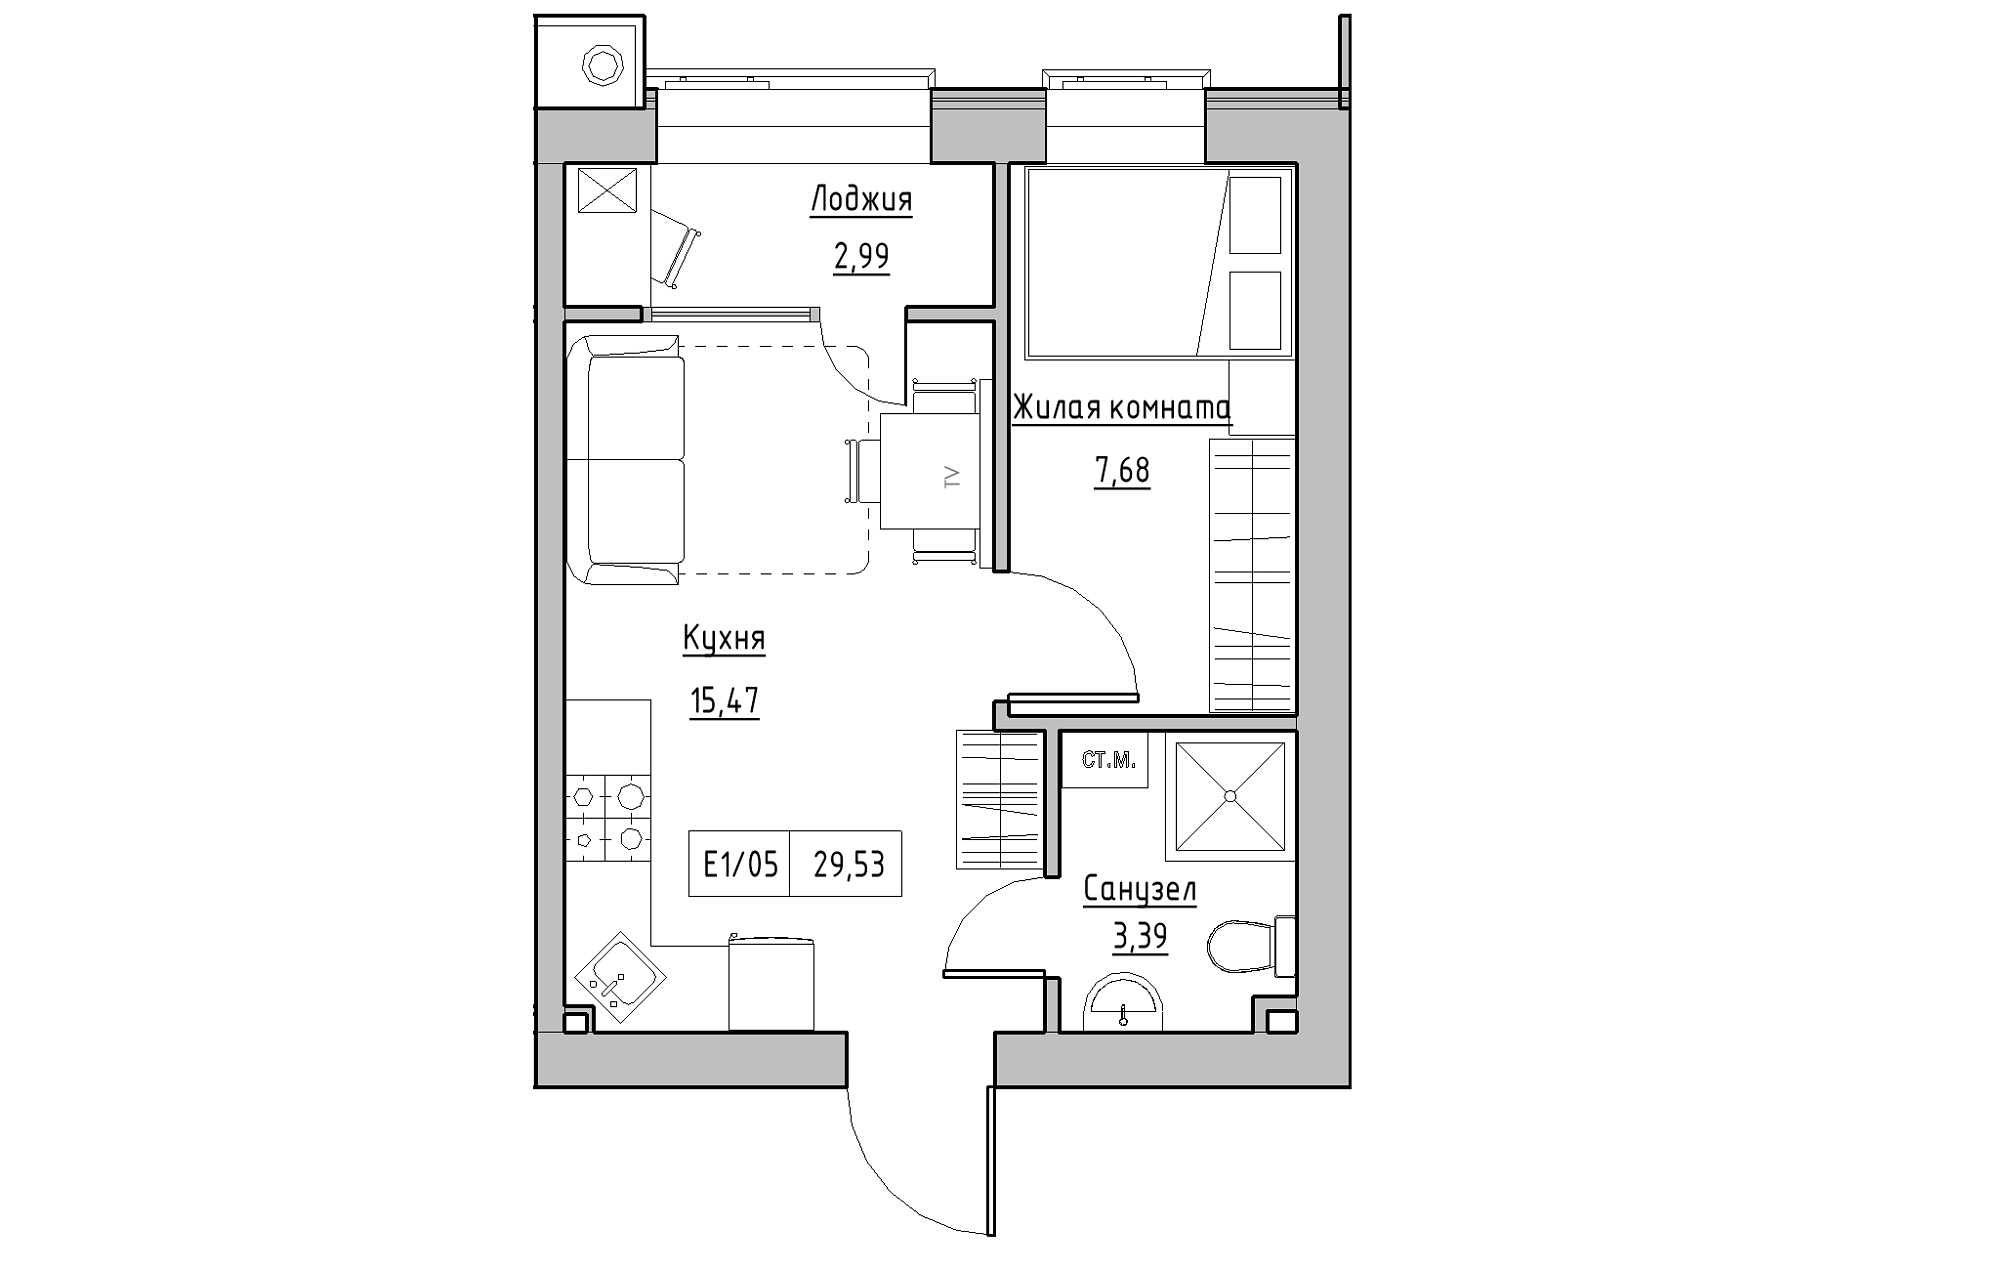 Planning 1-rm flats area 29.53m2, KS-013-04/0008.